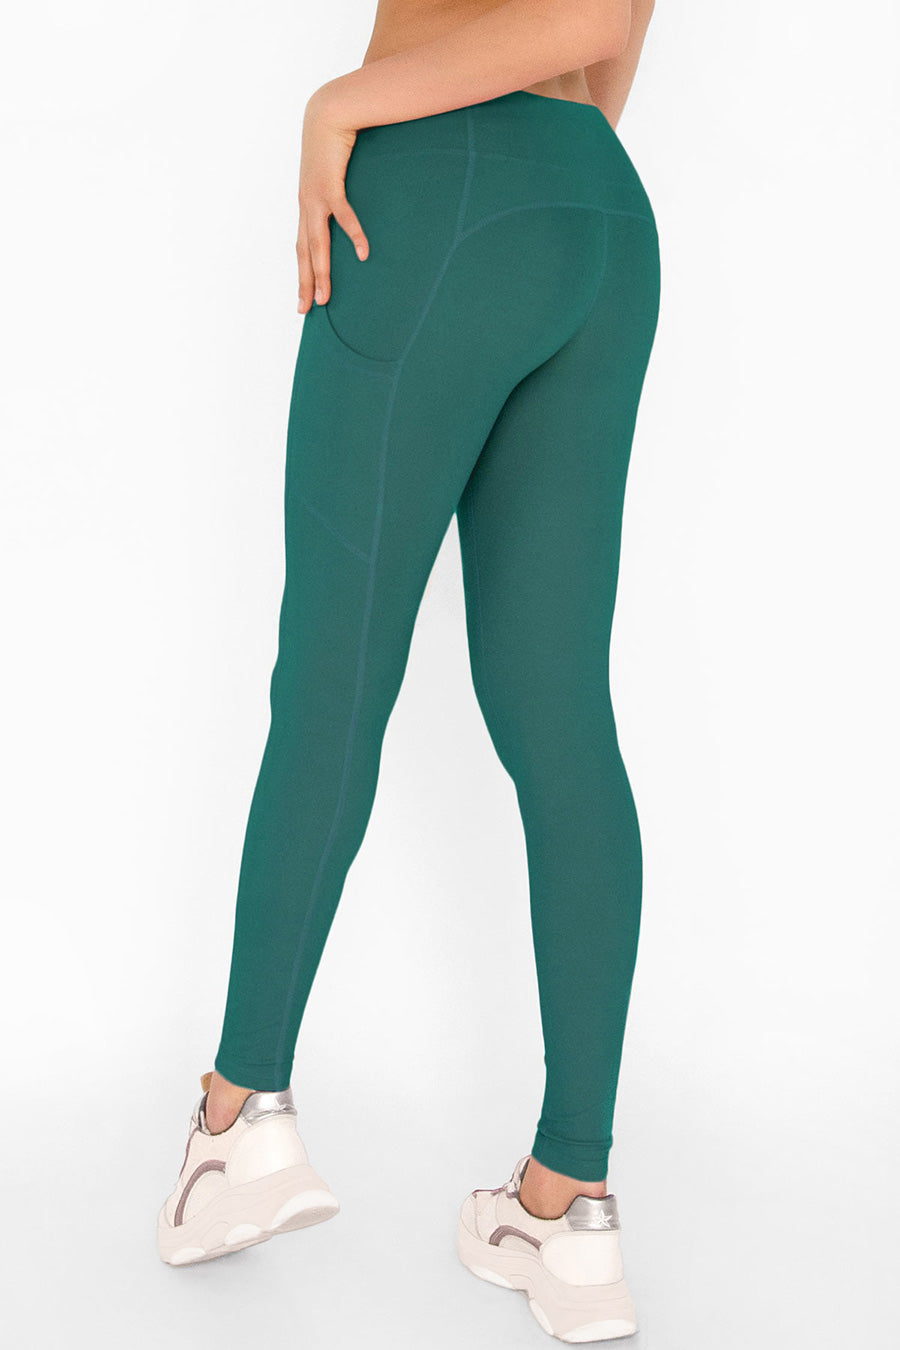 SEMI-ANNUAL SALE! Emerald Green Cassi Side Pockets Workout Leggings Yoga Pants - Women - Pineapple Clothing